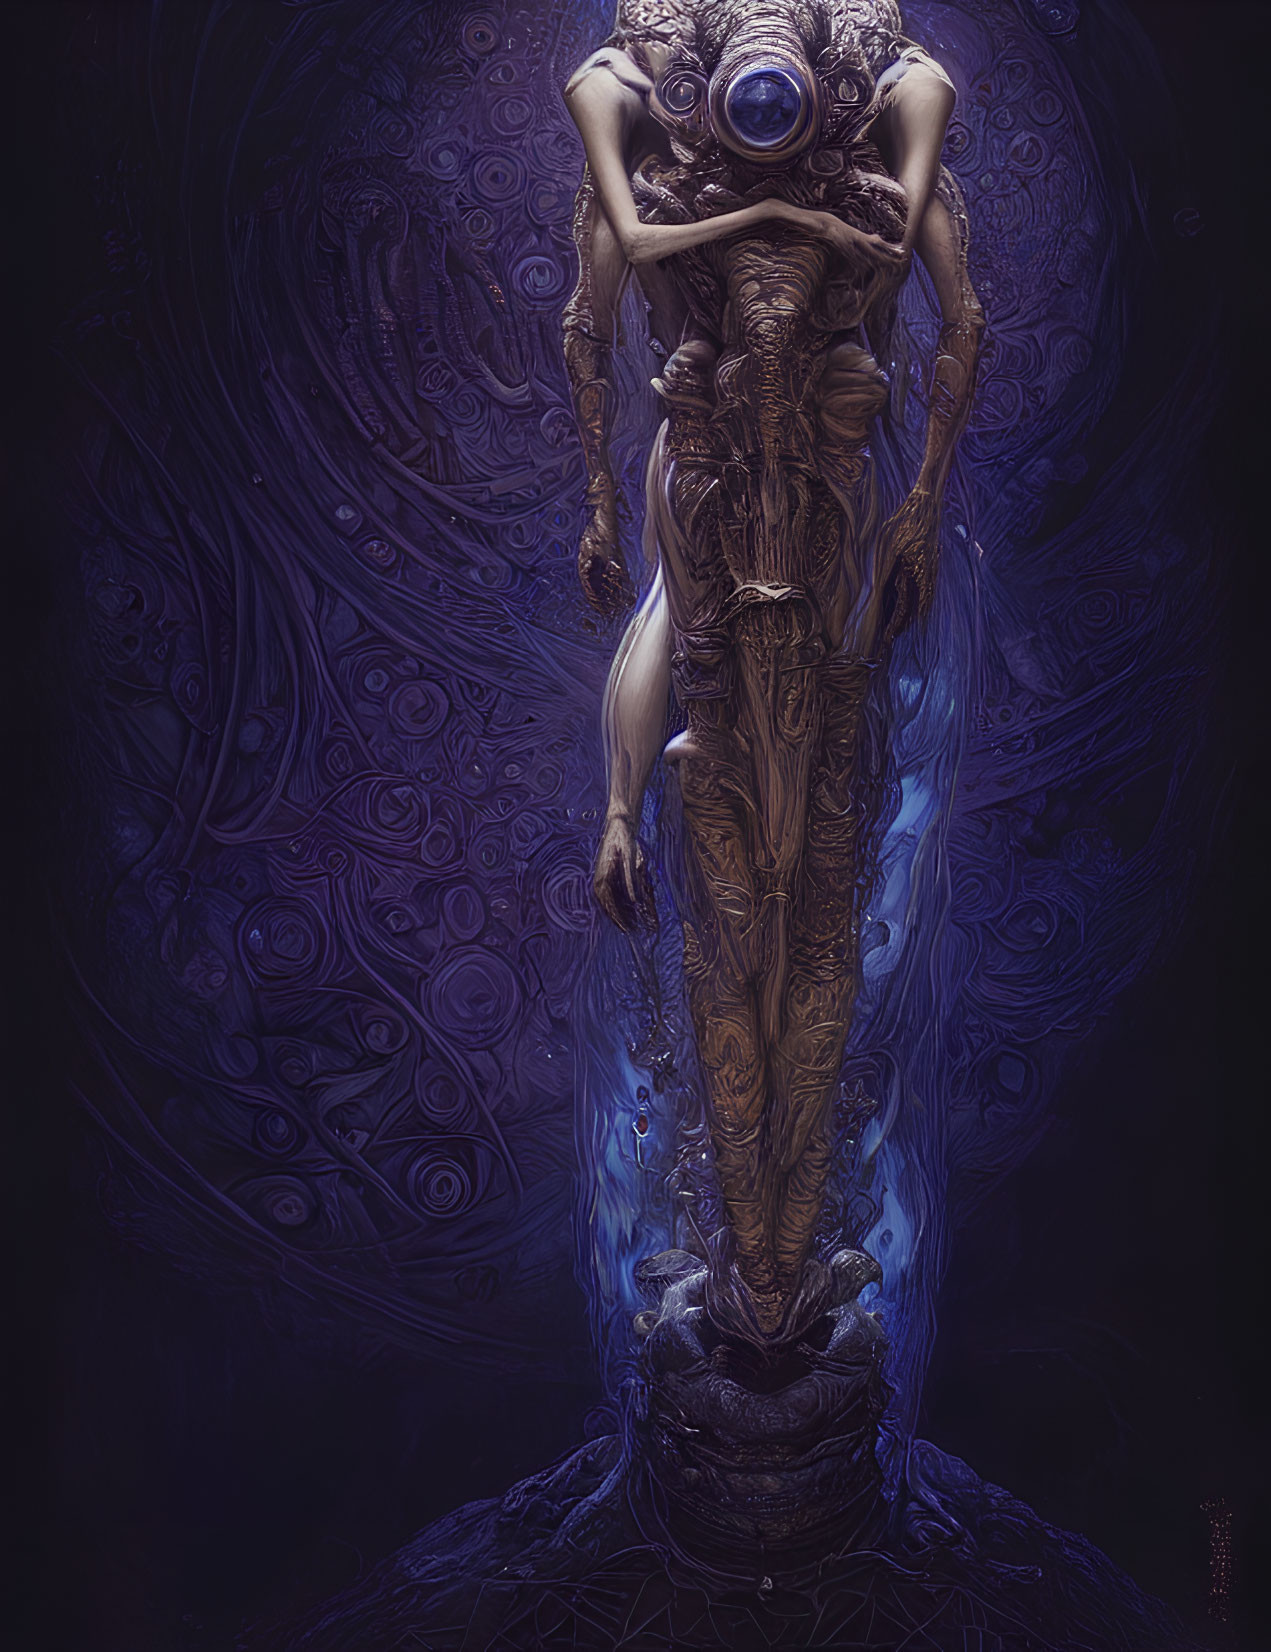 Surreal humanoid figure in swirling dark blue ambiance